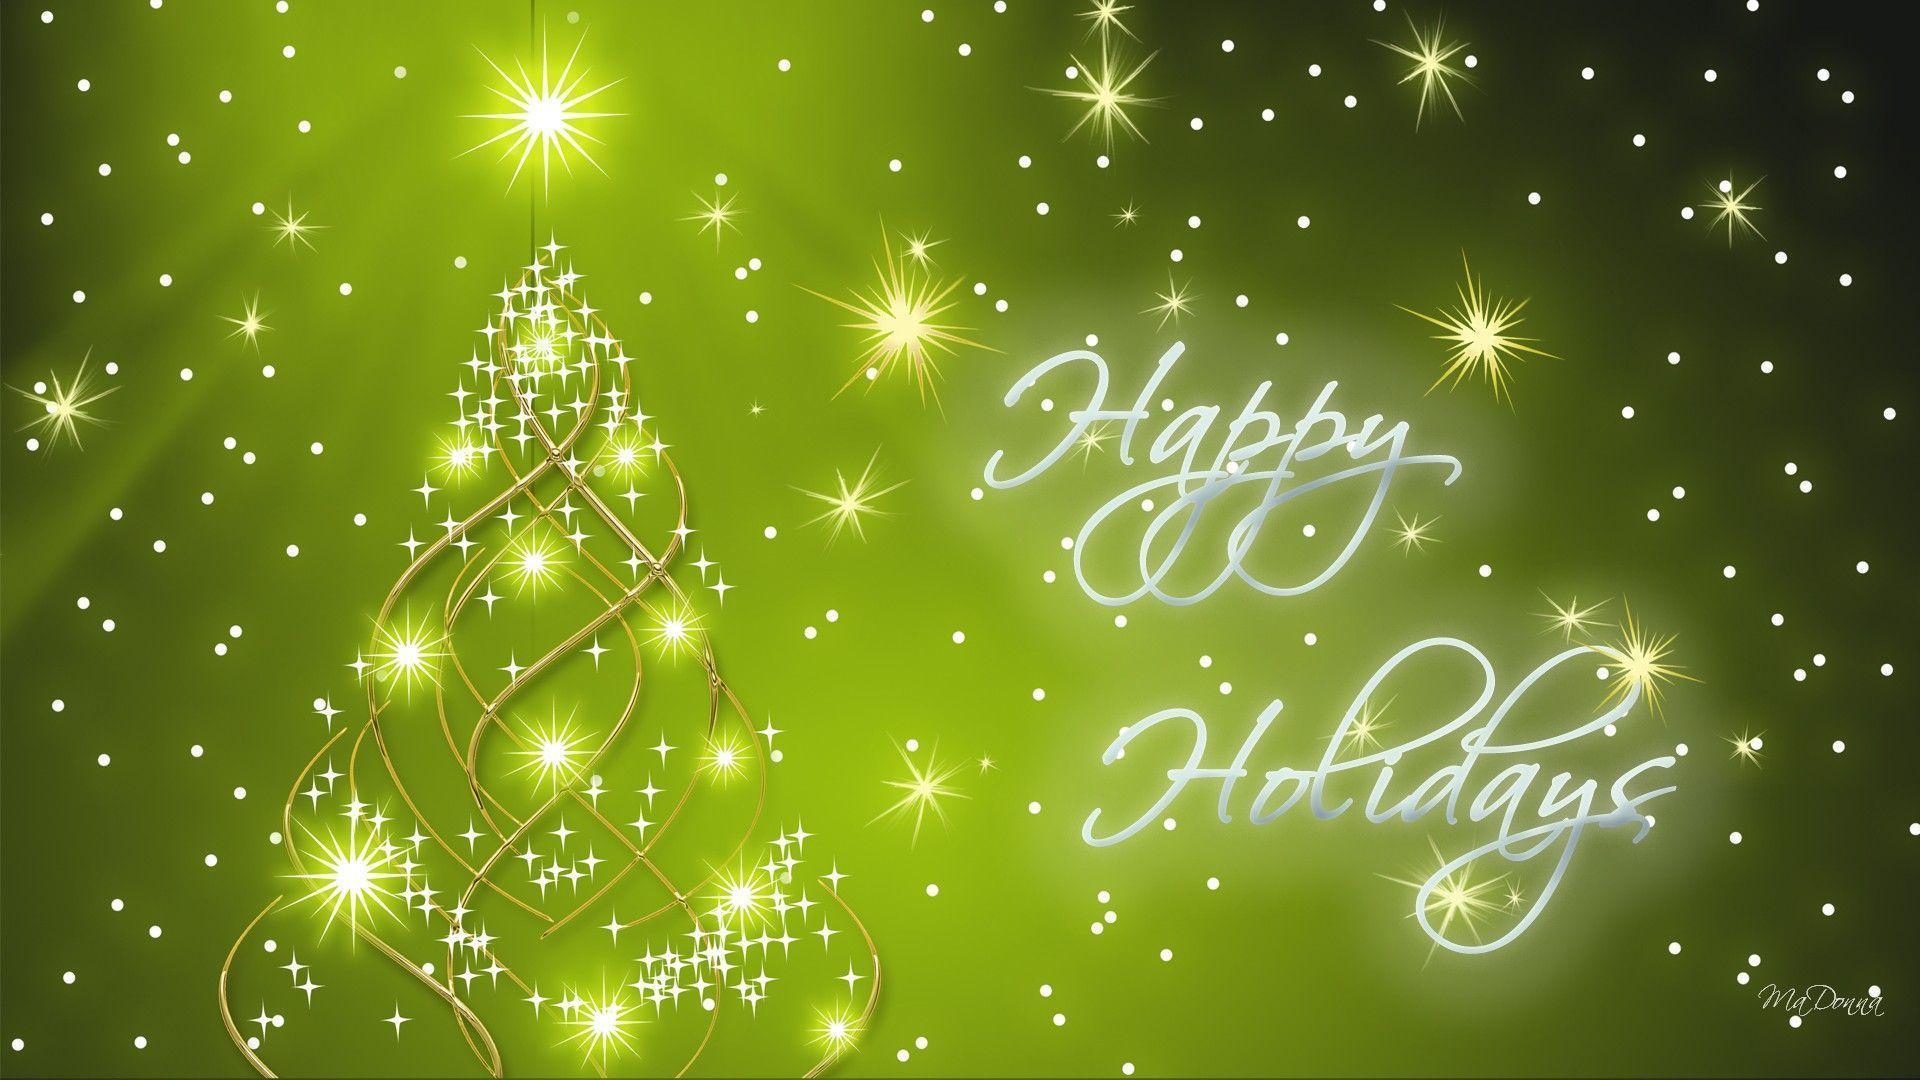 Happy Holidays Desktop Wallpapers - Top Free Happy Holidays Desktop ...